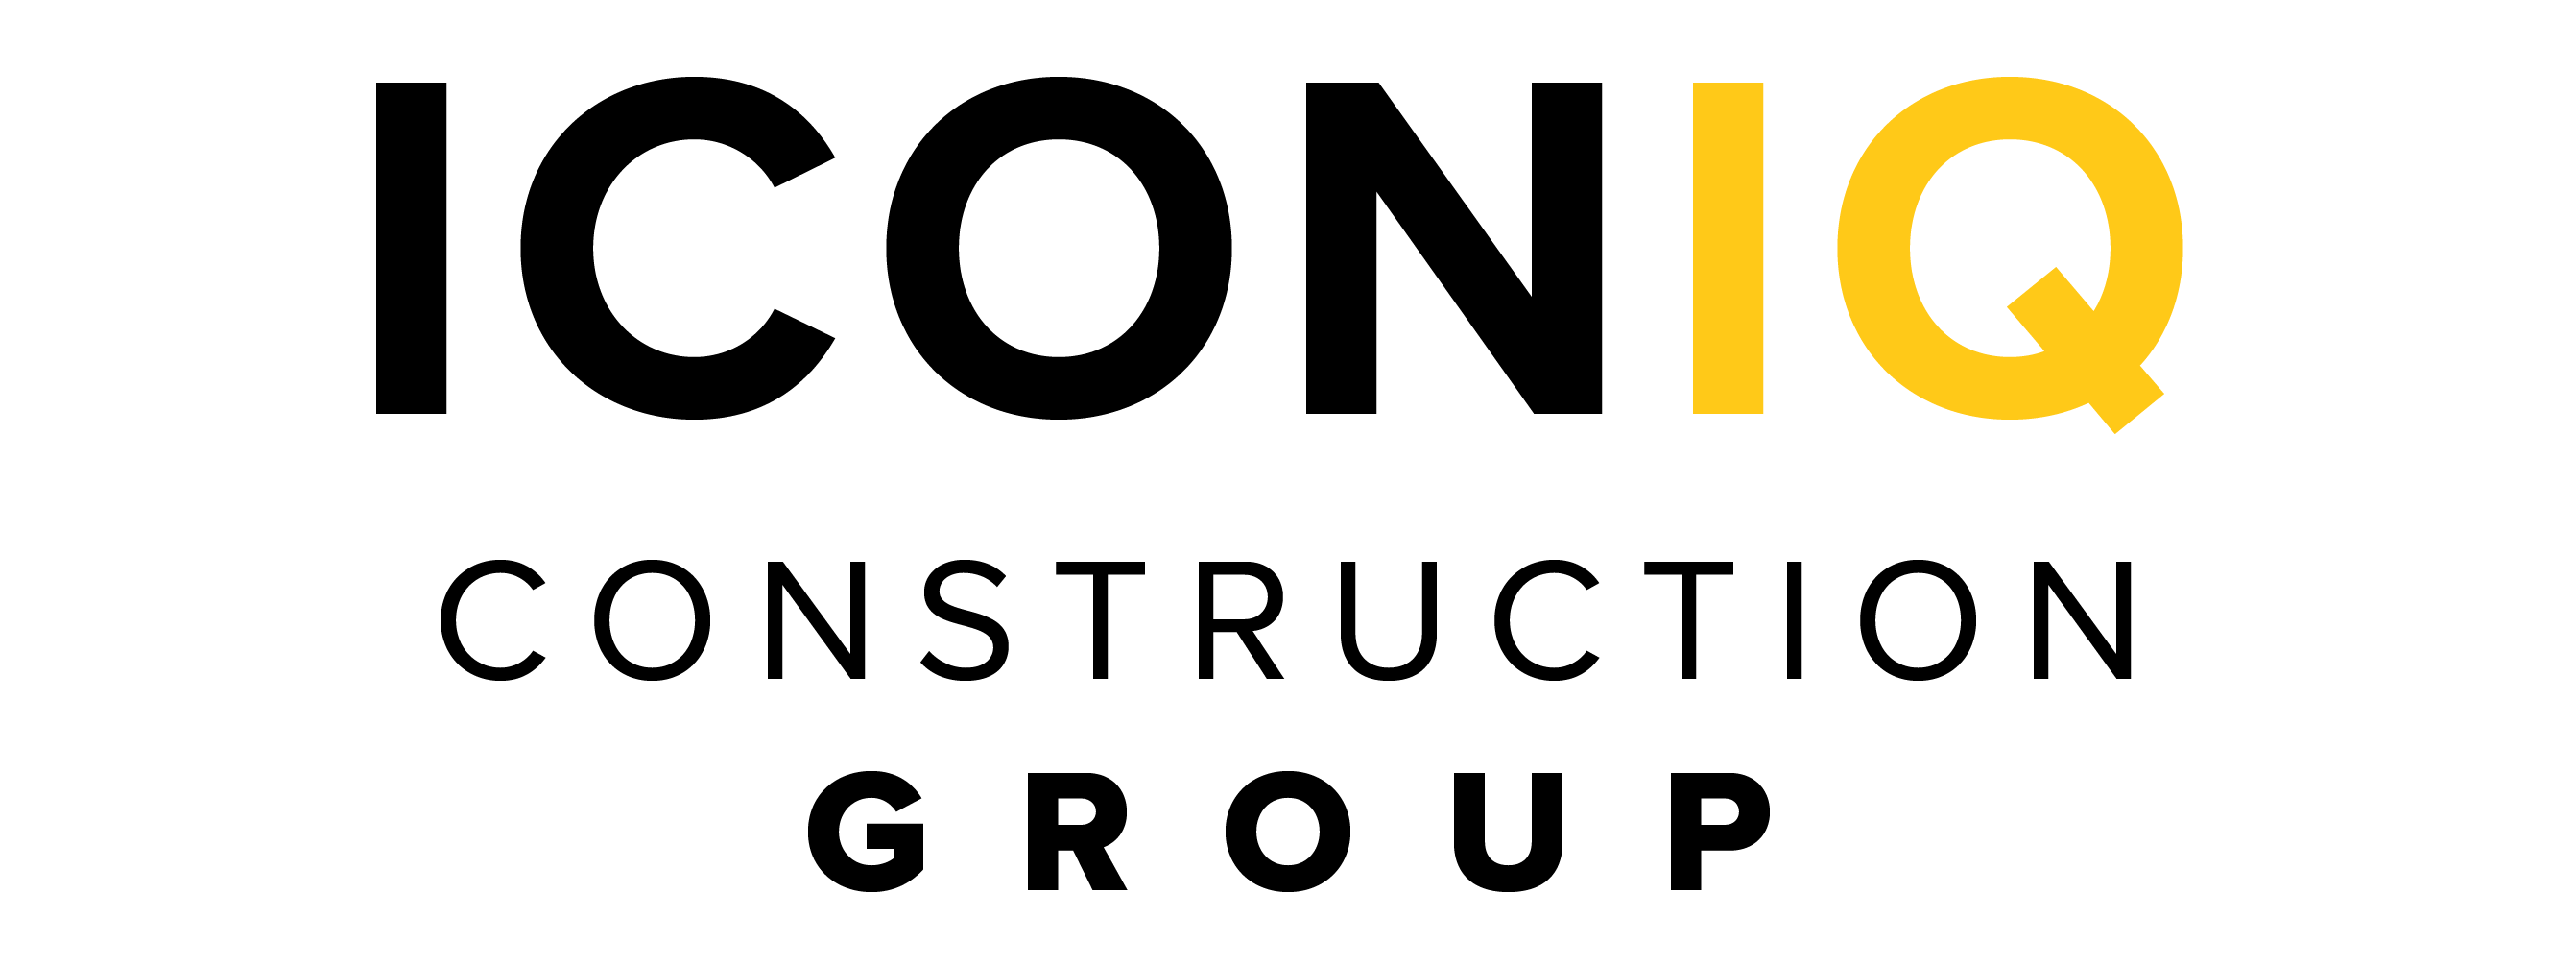 Form Primary Logo CMYK